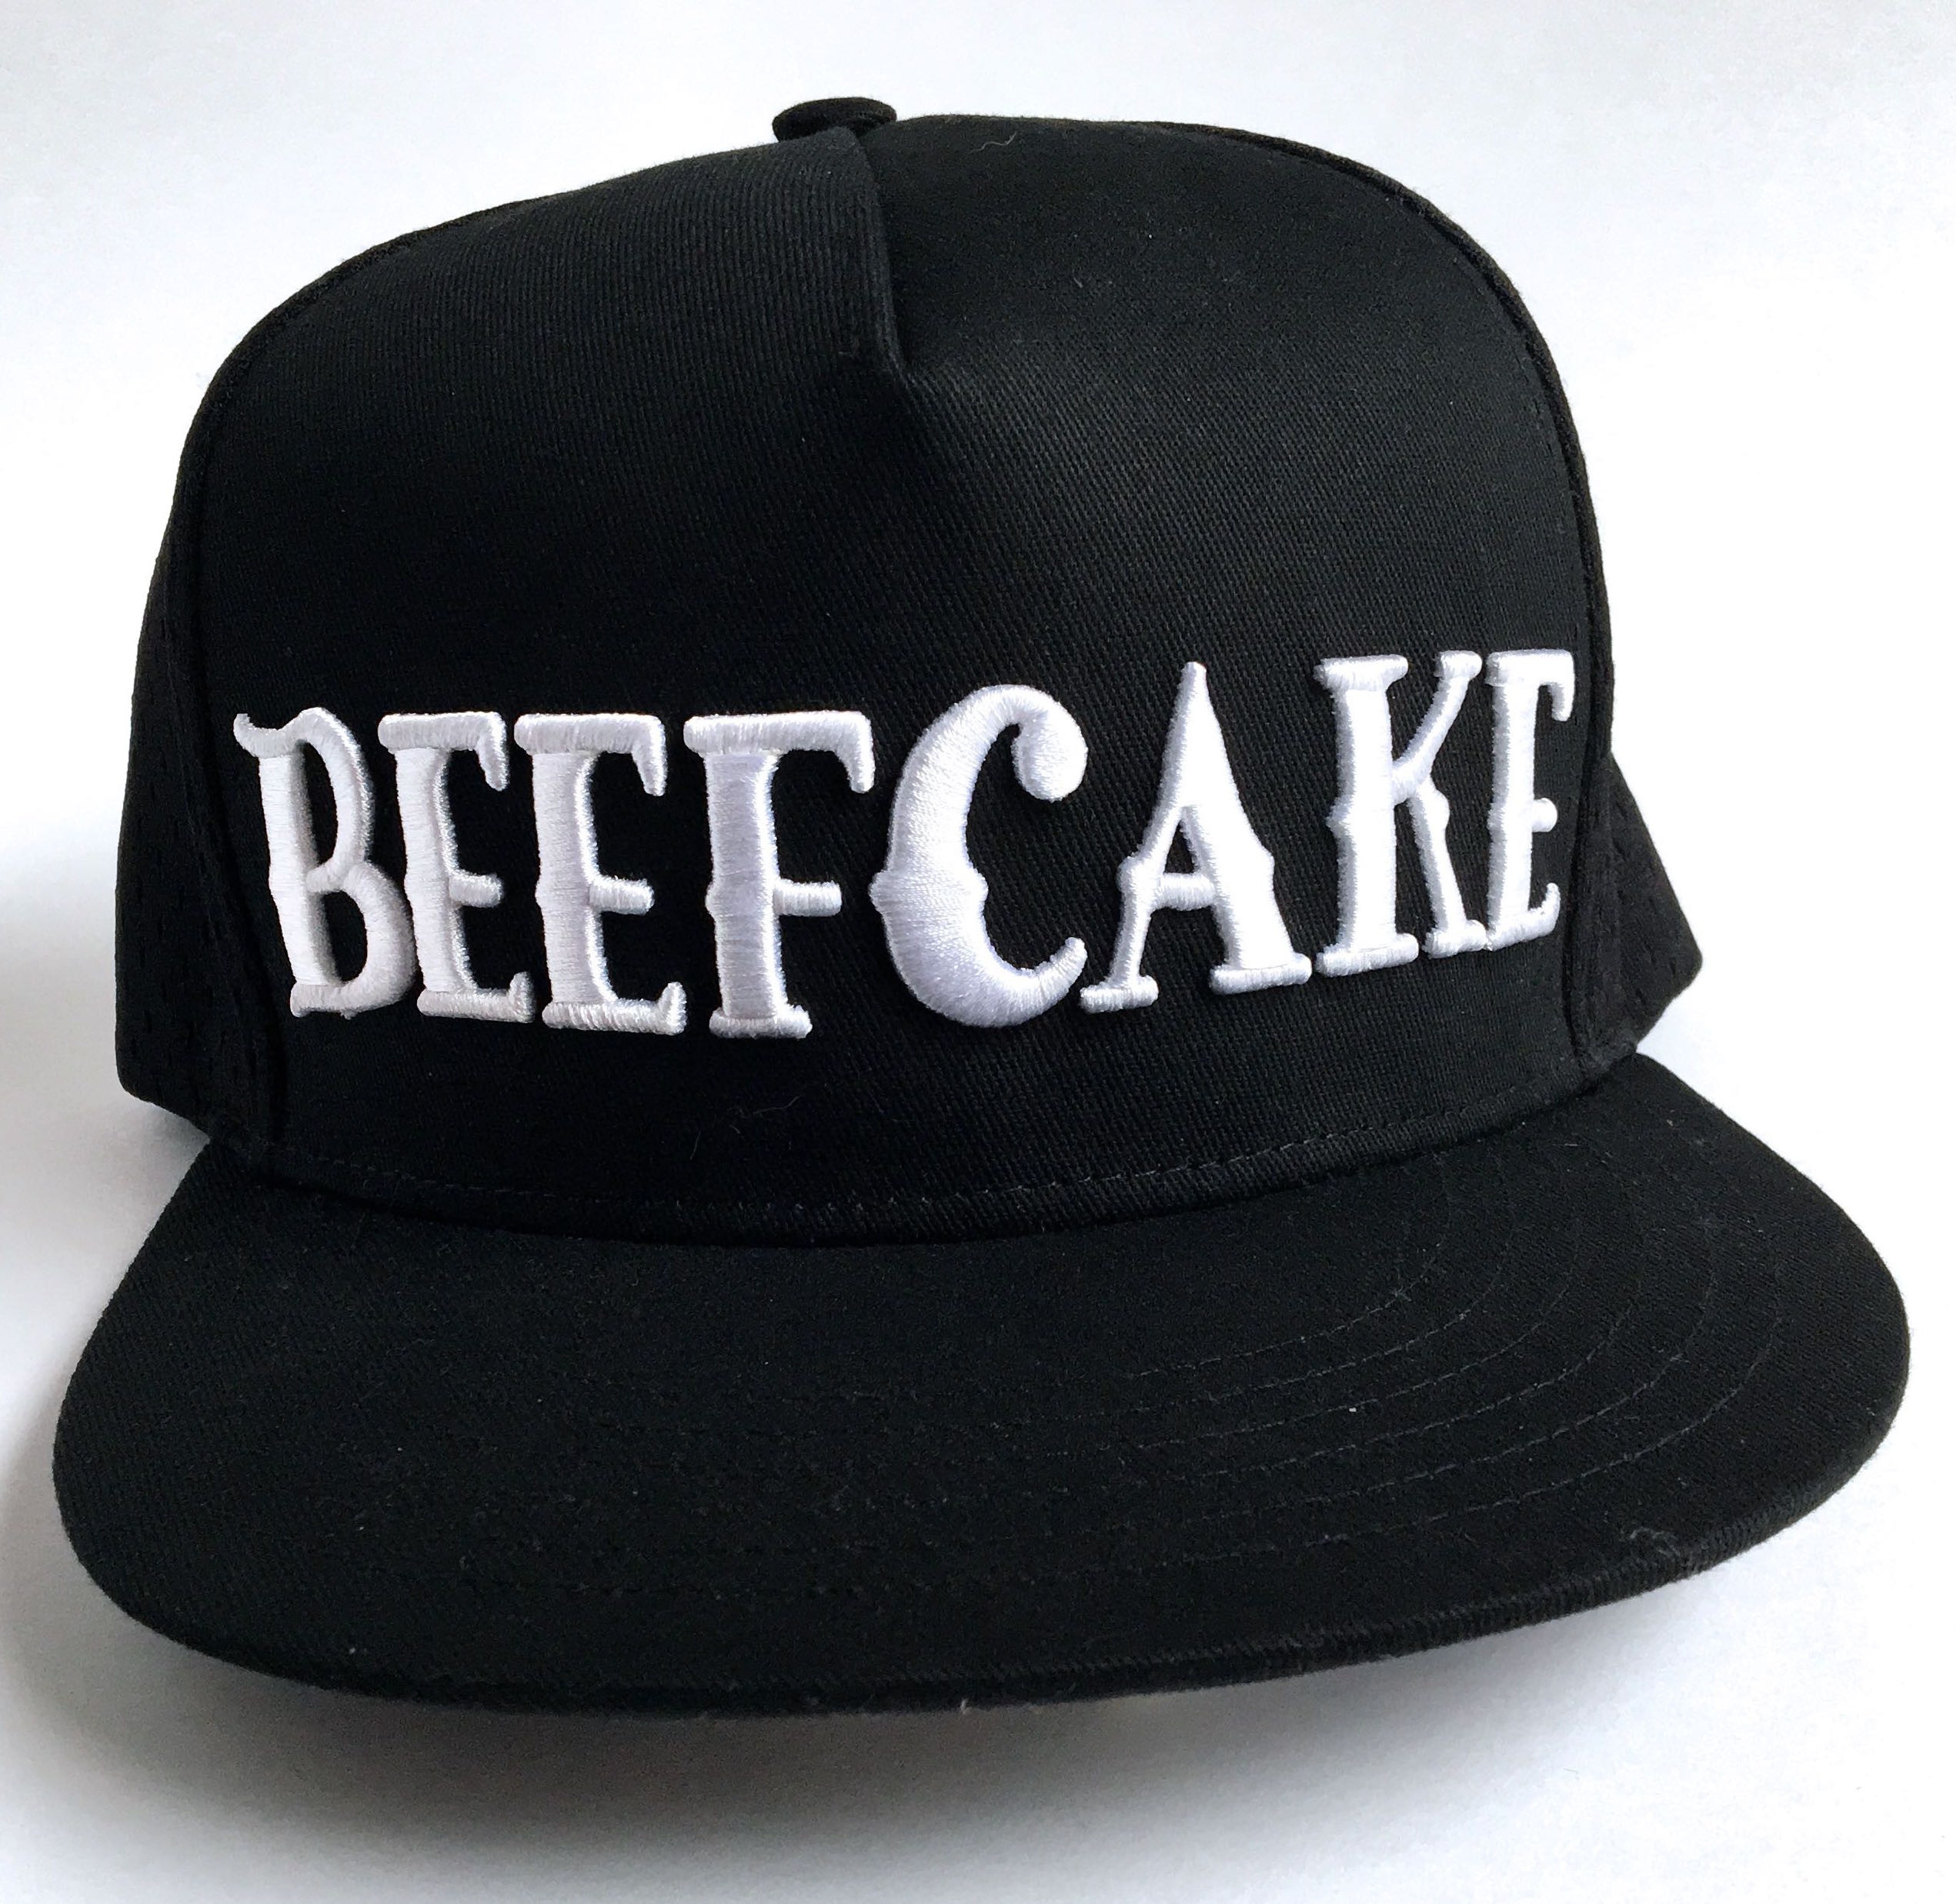 Beefcake snapback hat